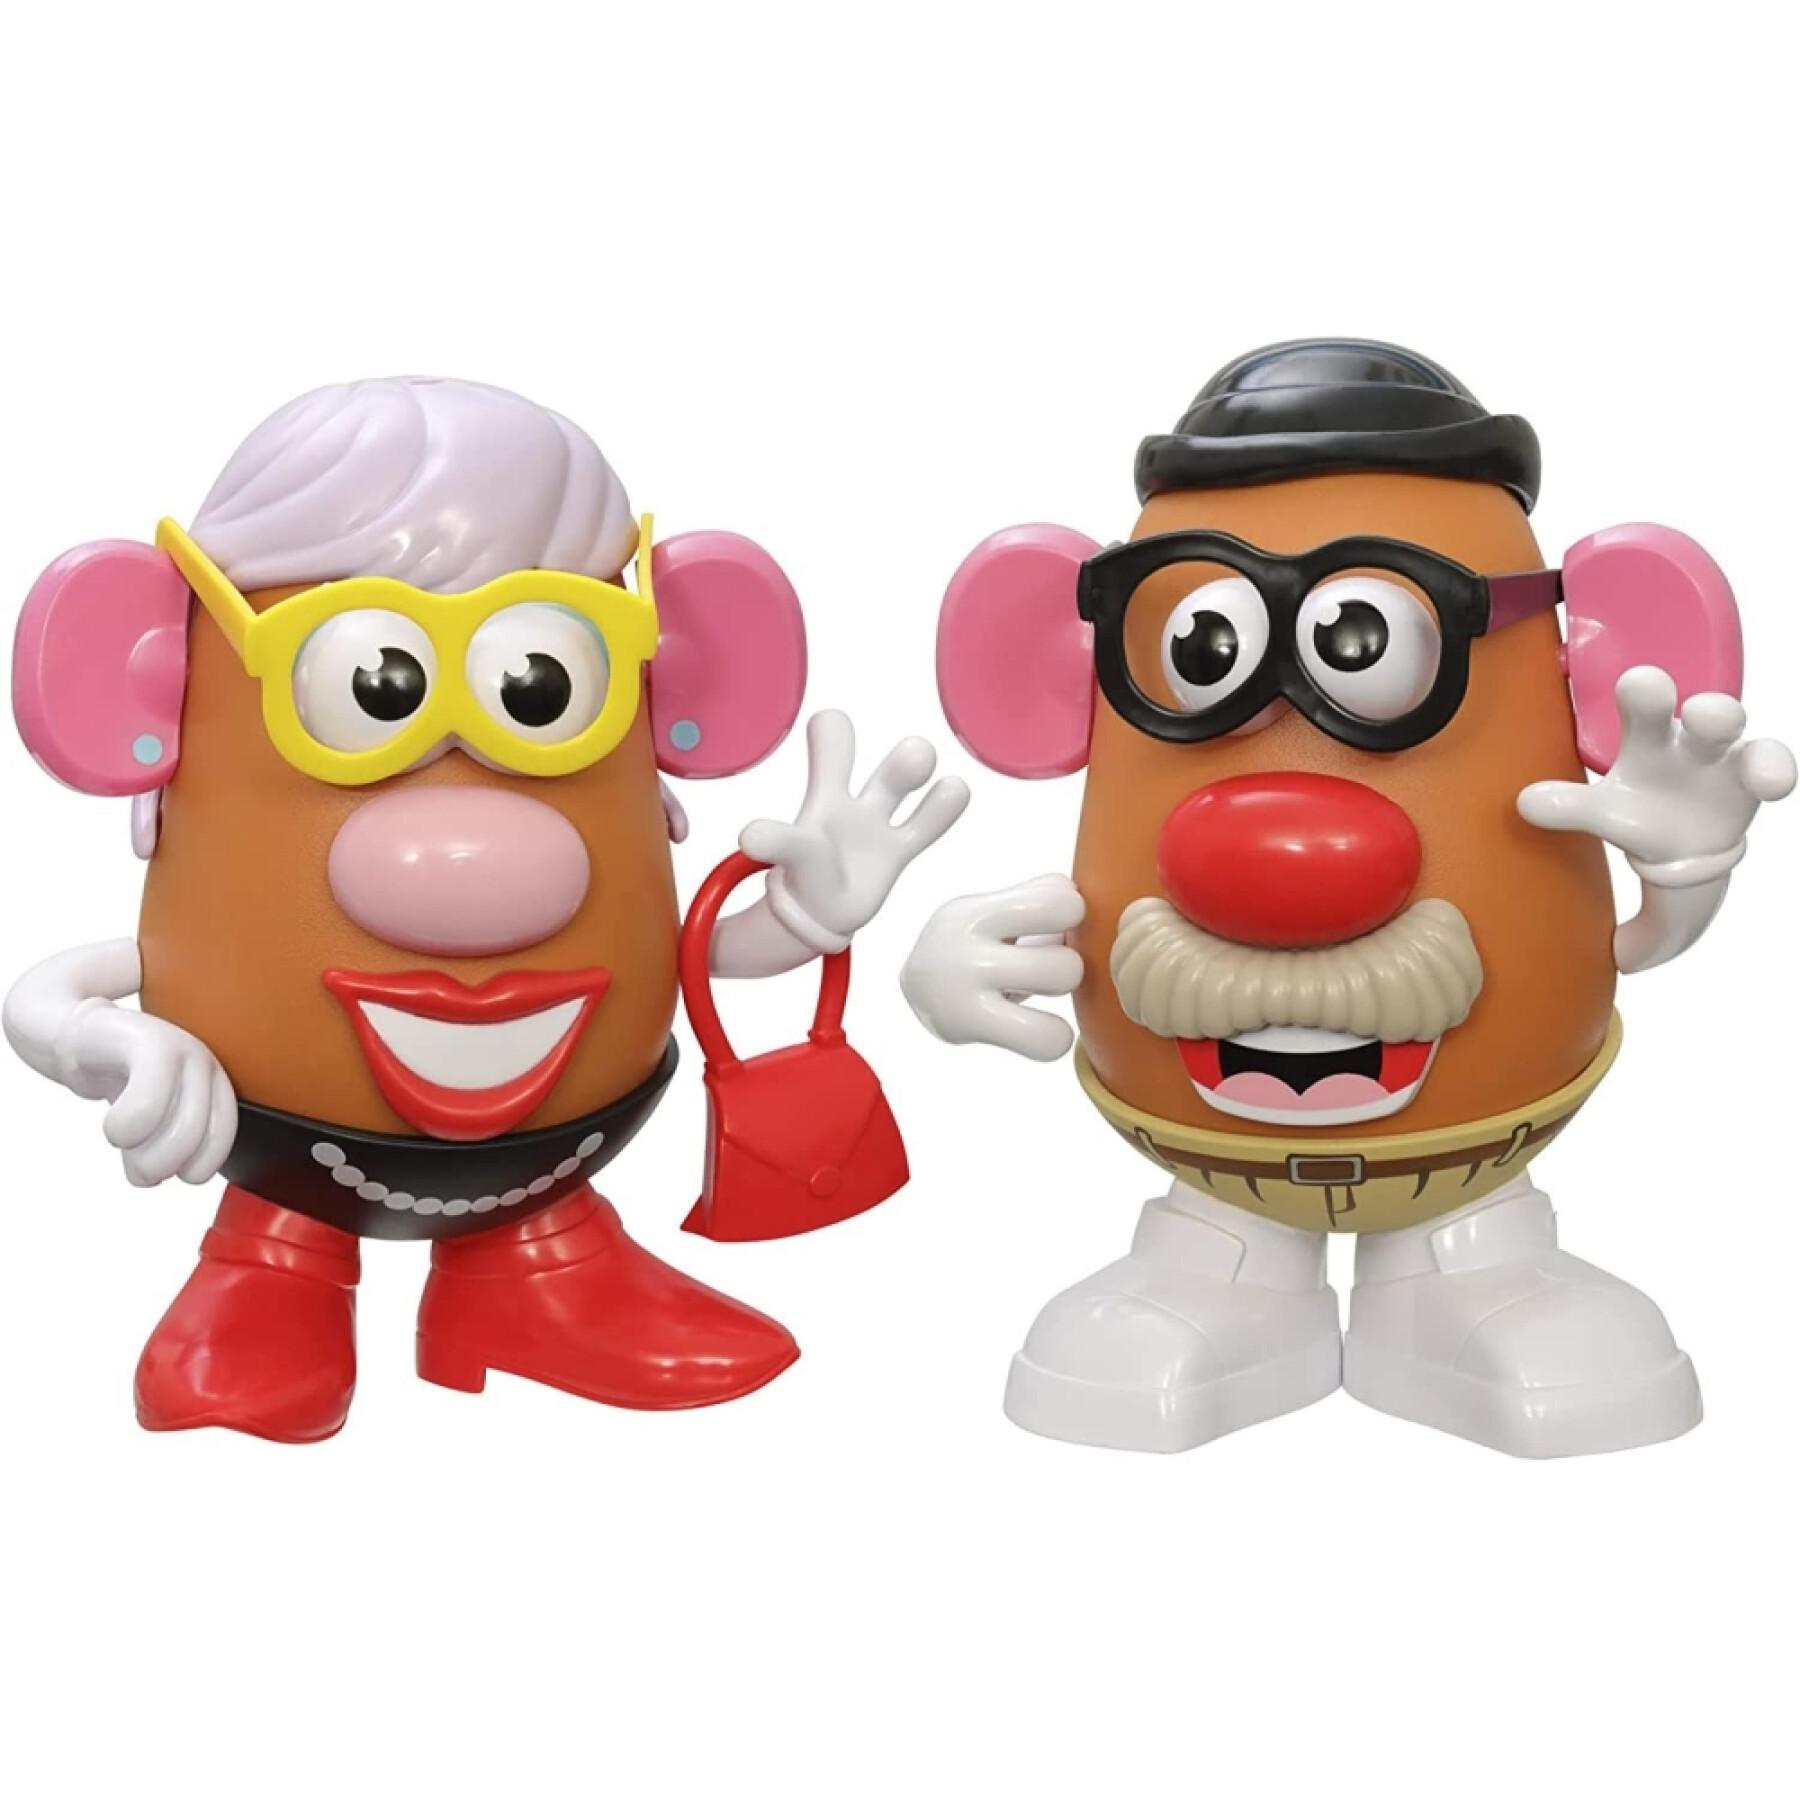 Grand-mère + Grand-père Potato Head Hasbro